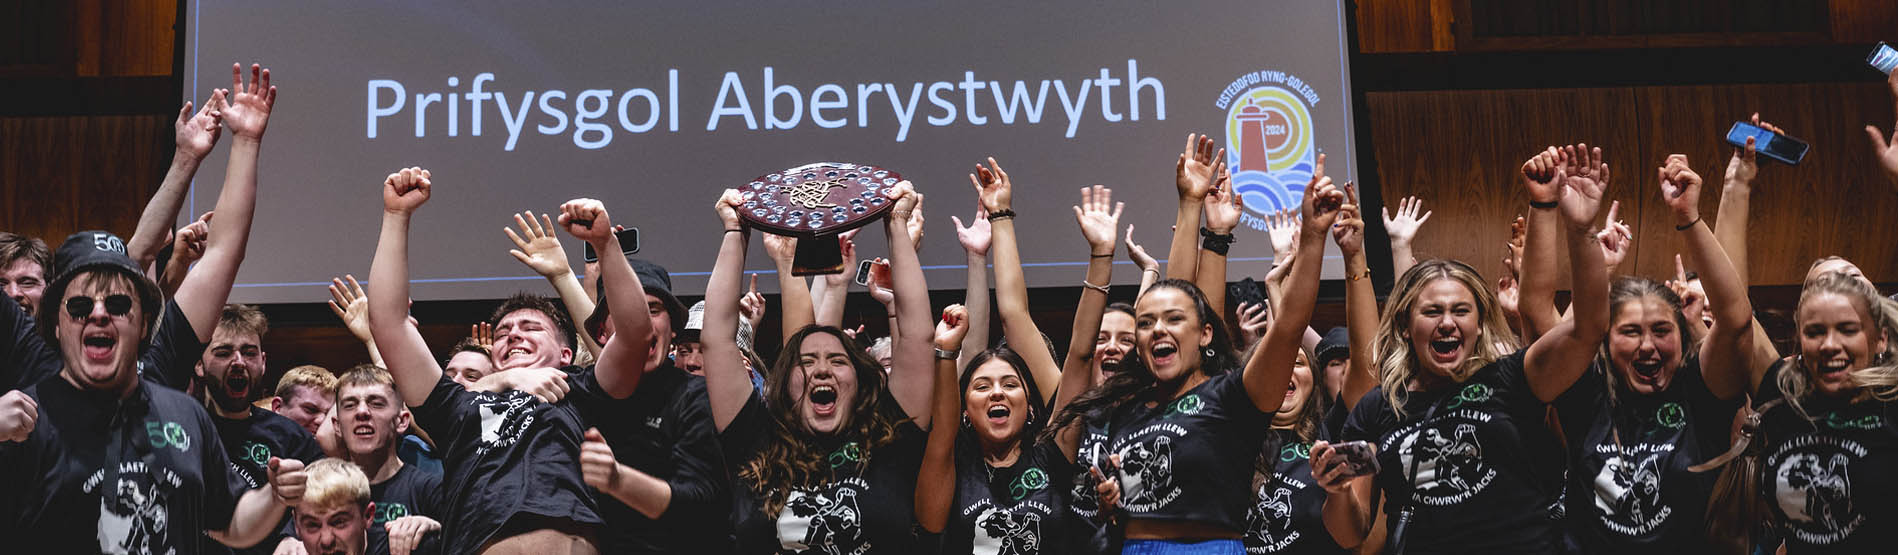 Aberystwyth University students hold up winning sheild